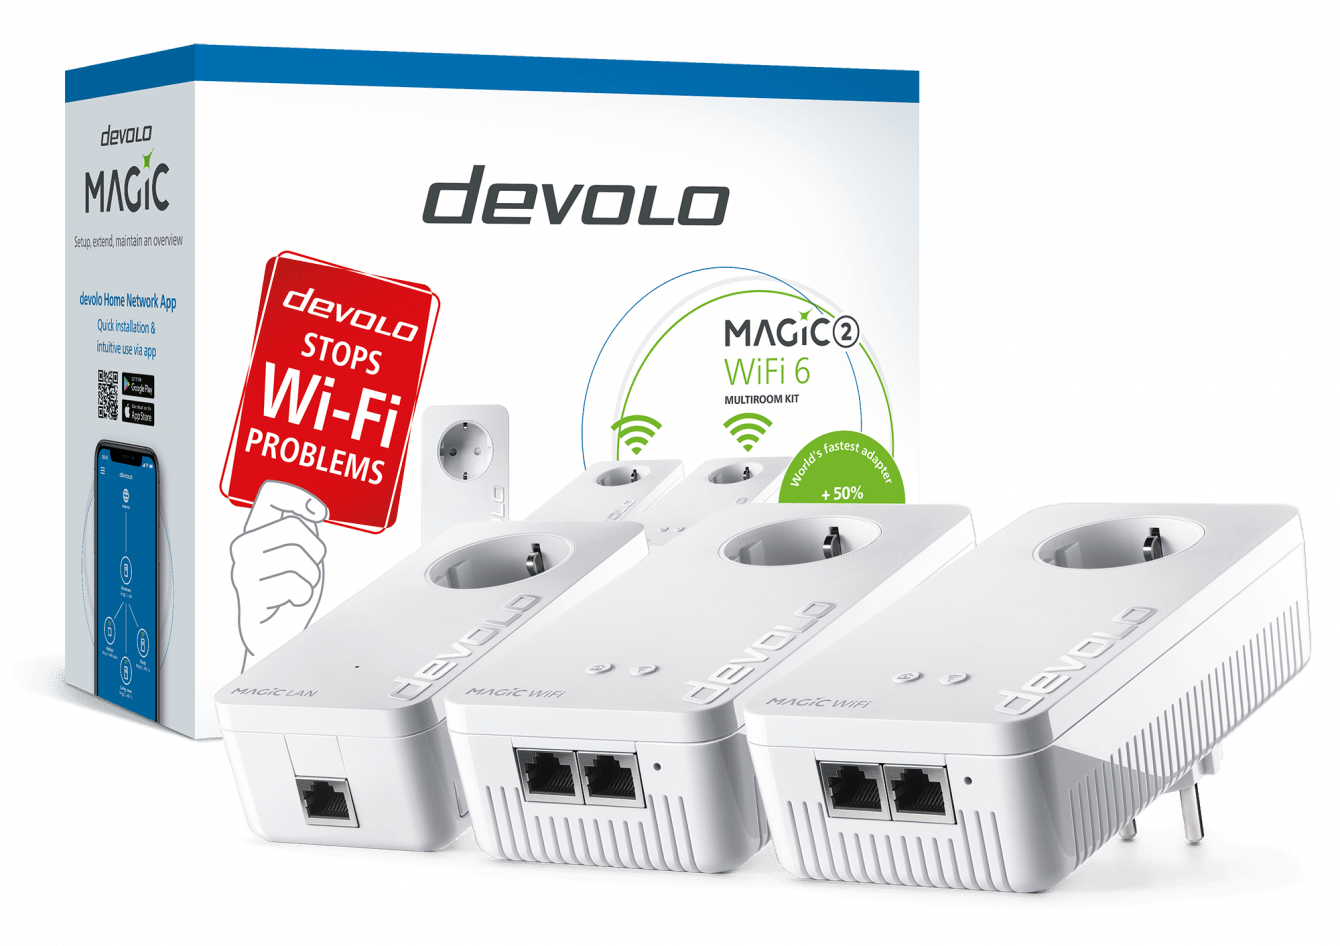 Devolo Magic 2 WiFi 6: the versatile Powerline adapter